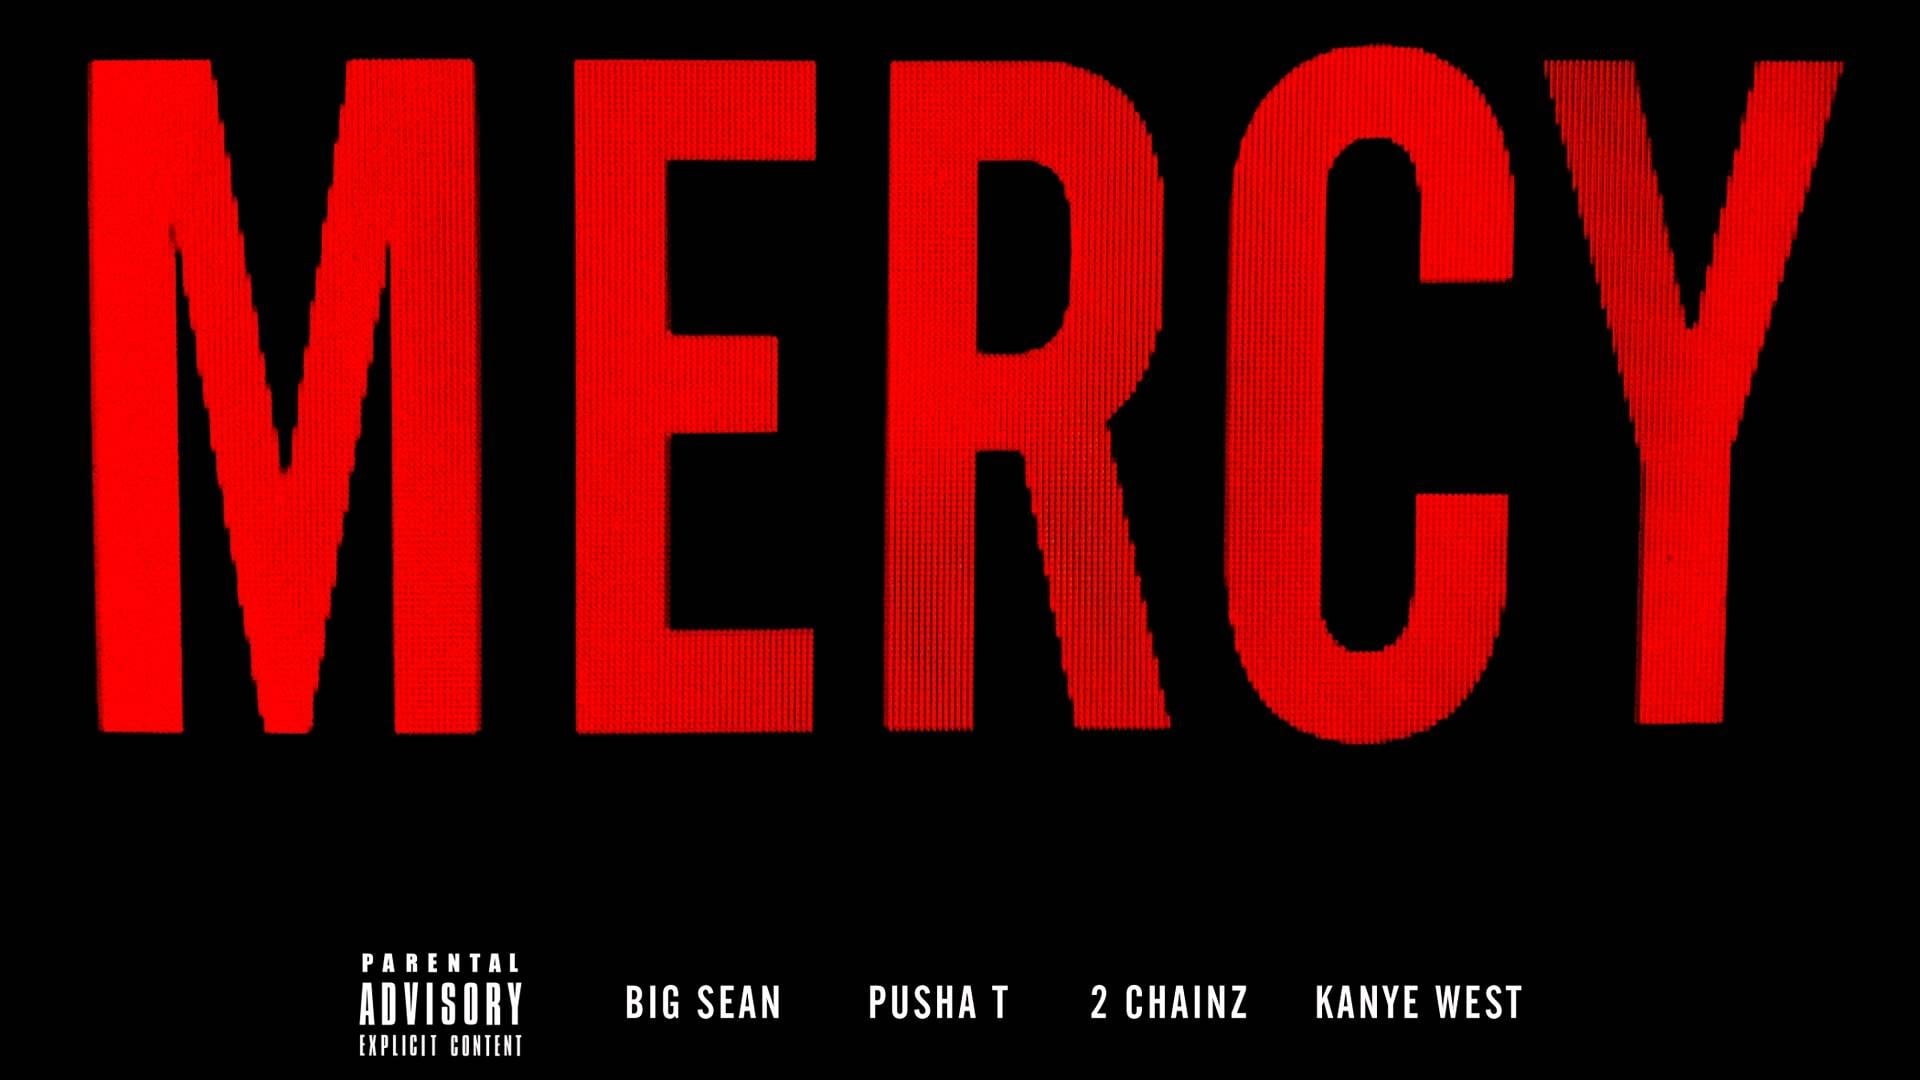 Kanye West Mercy. Mercy 2 Chainz. Kanye West Mercy альбом. Kanye West big Sean.